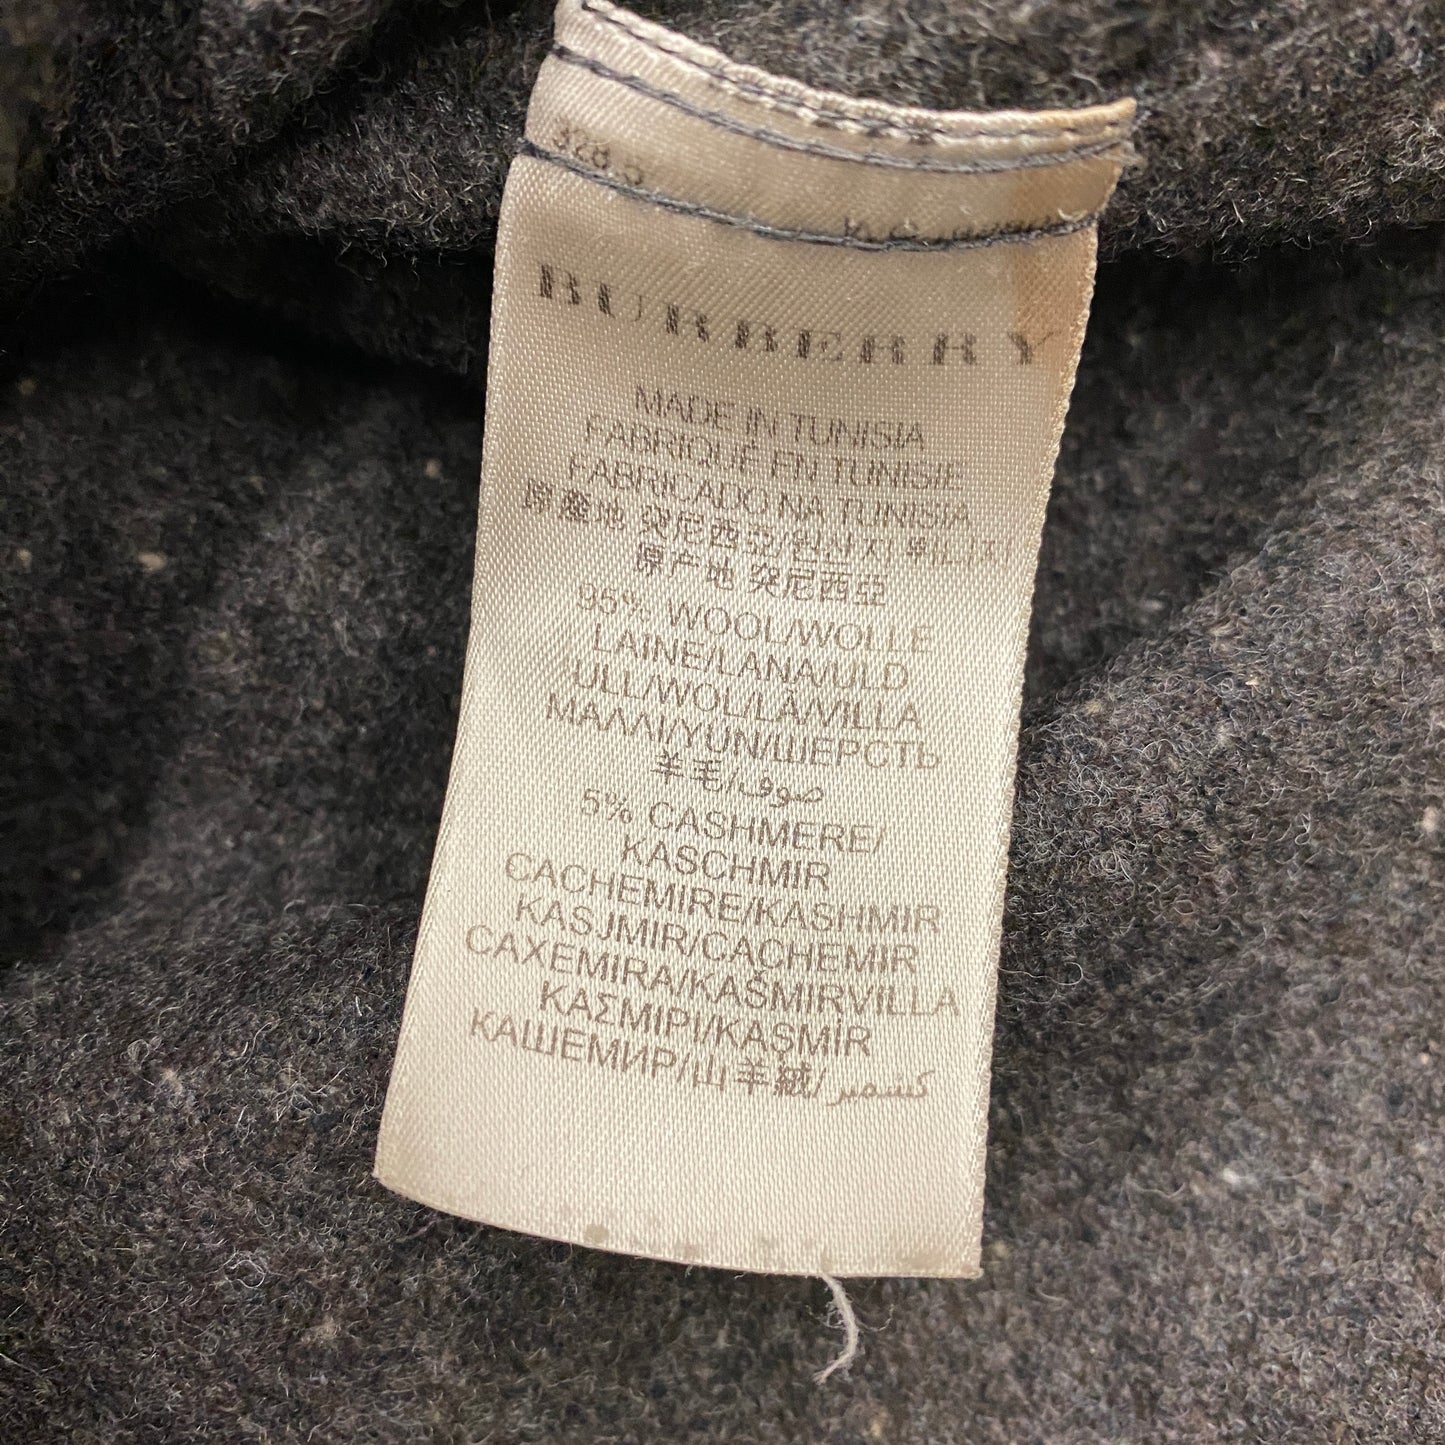 Burberry Tailored Wool Button Down Shirt - Size Medium